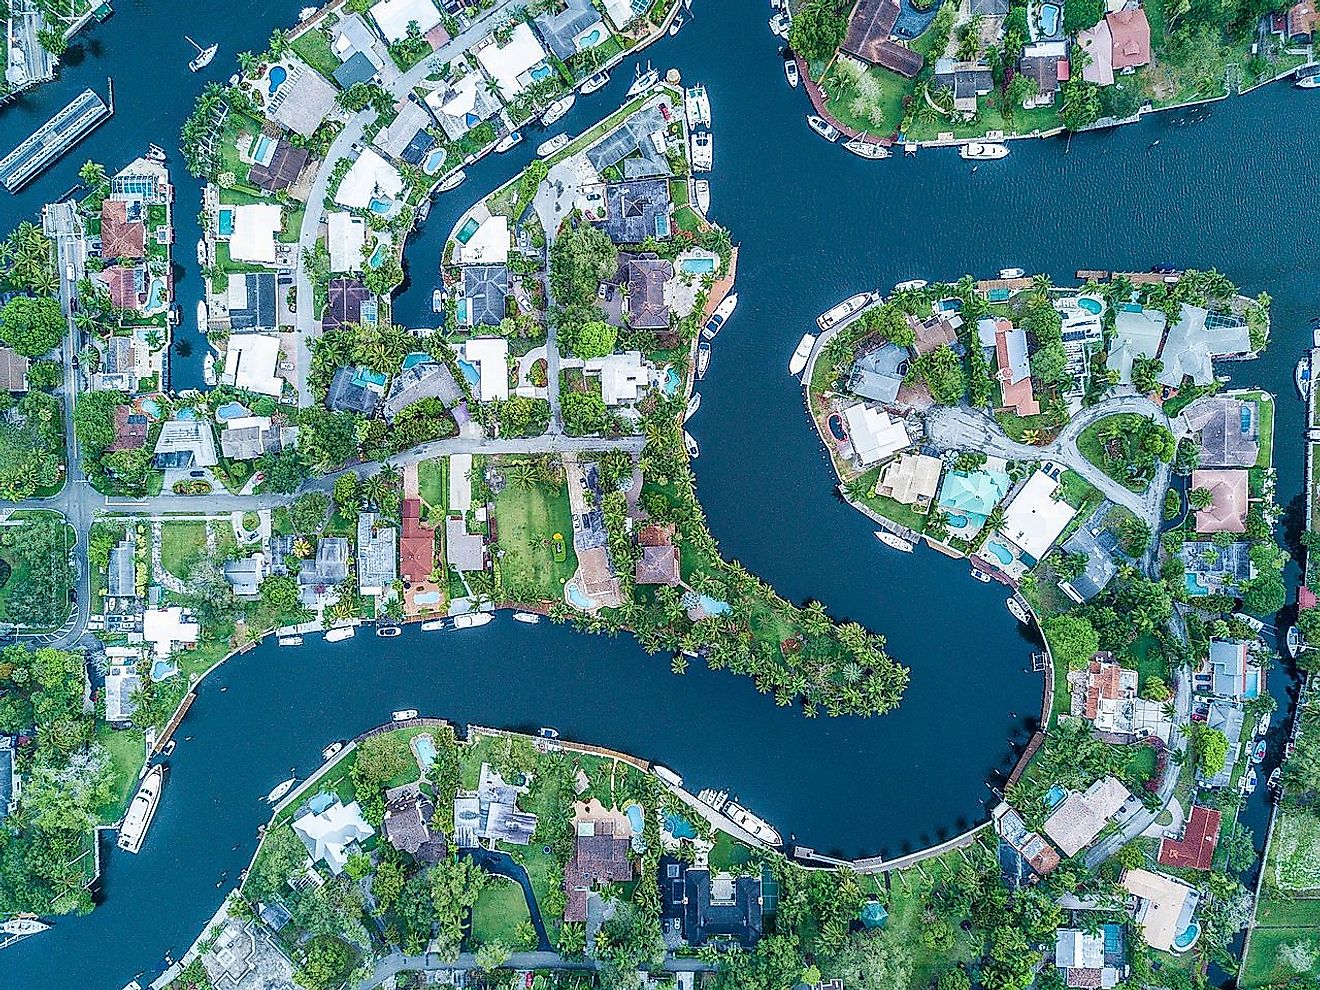 Tarpon River Neighborhood in Fort Lauderdale, Florida. Image credit: LuizCent/Wikimedia.org